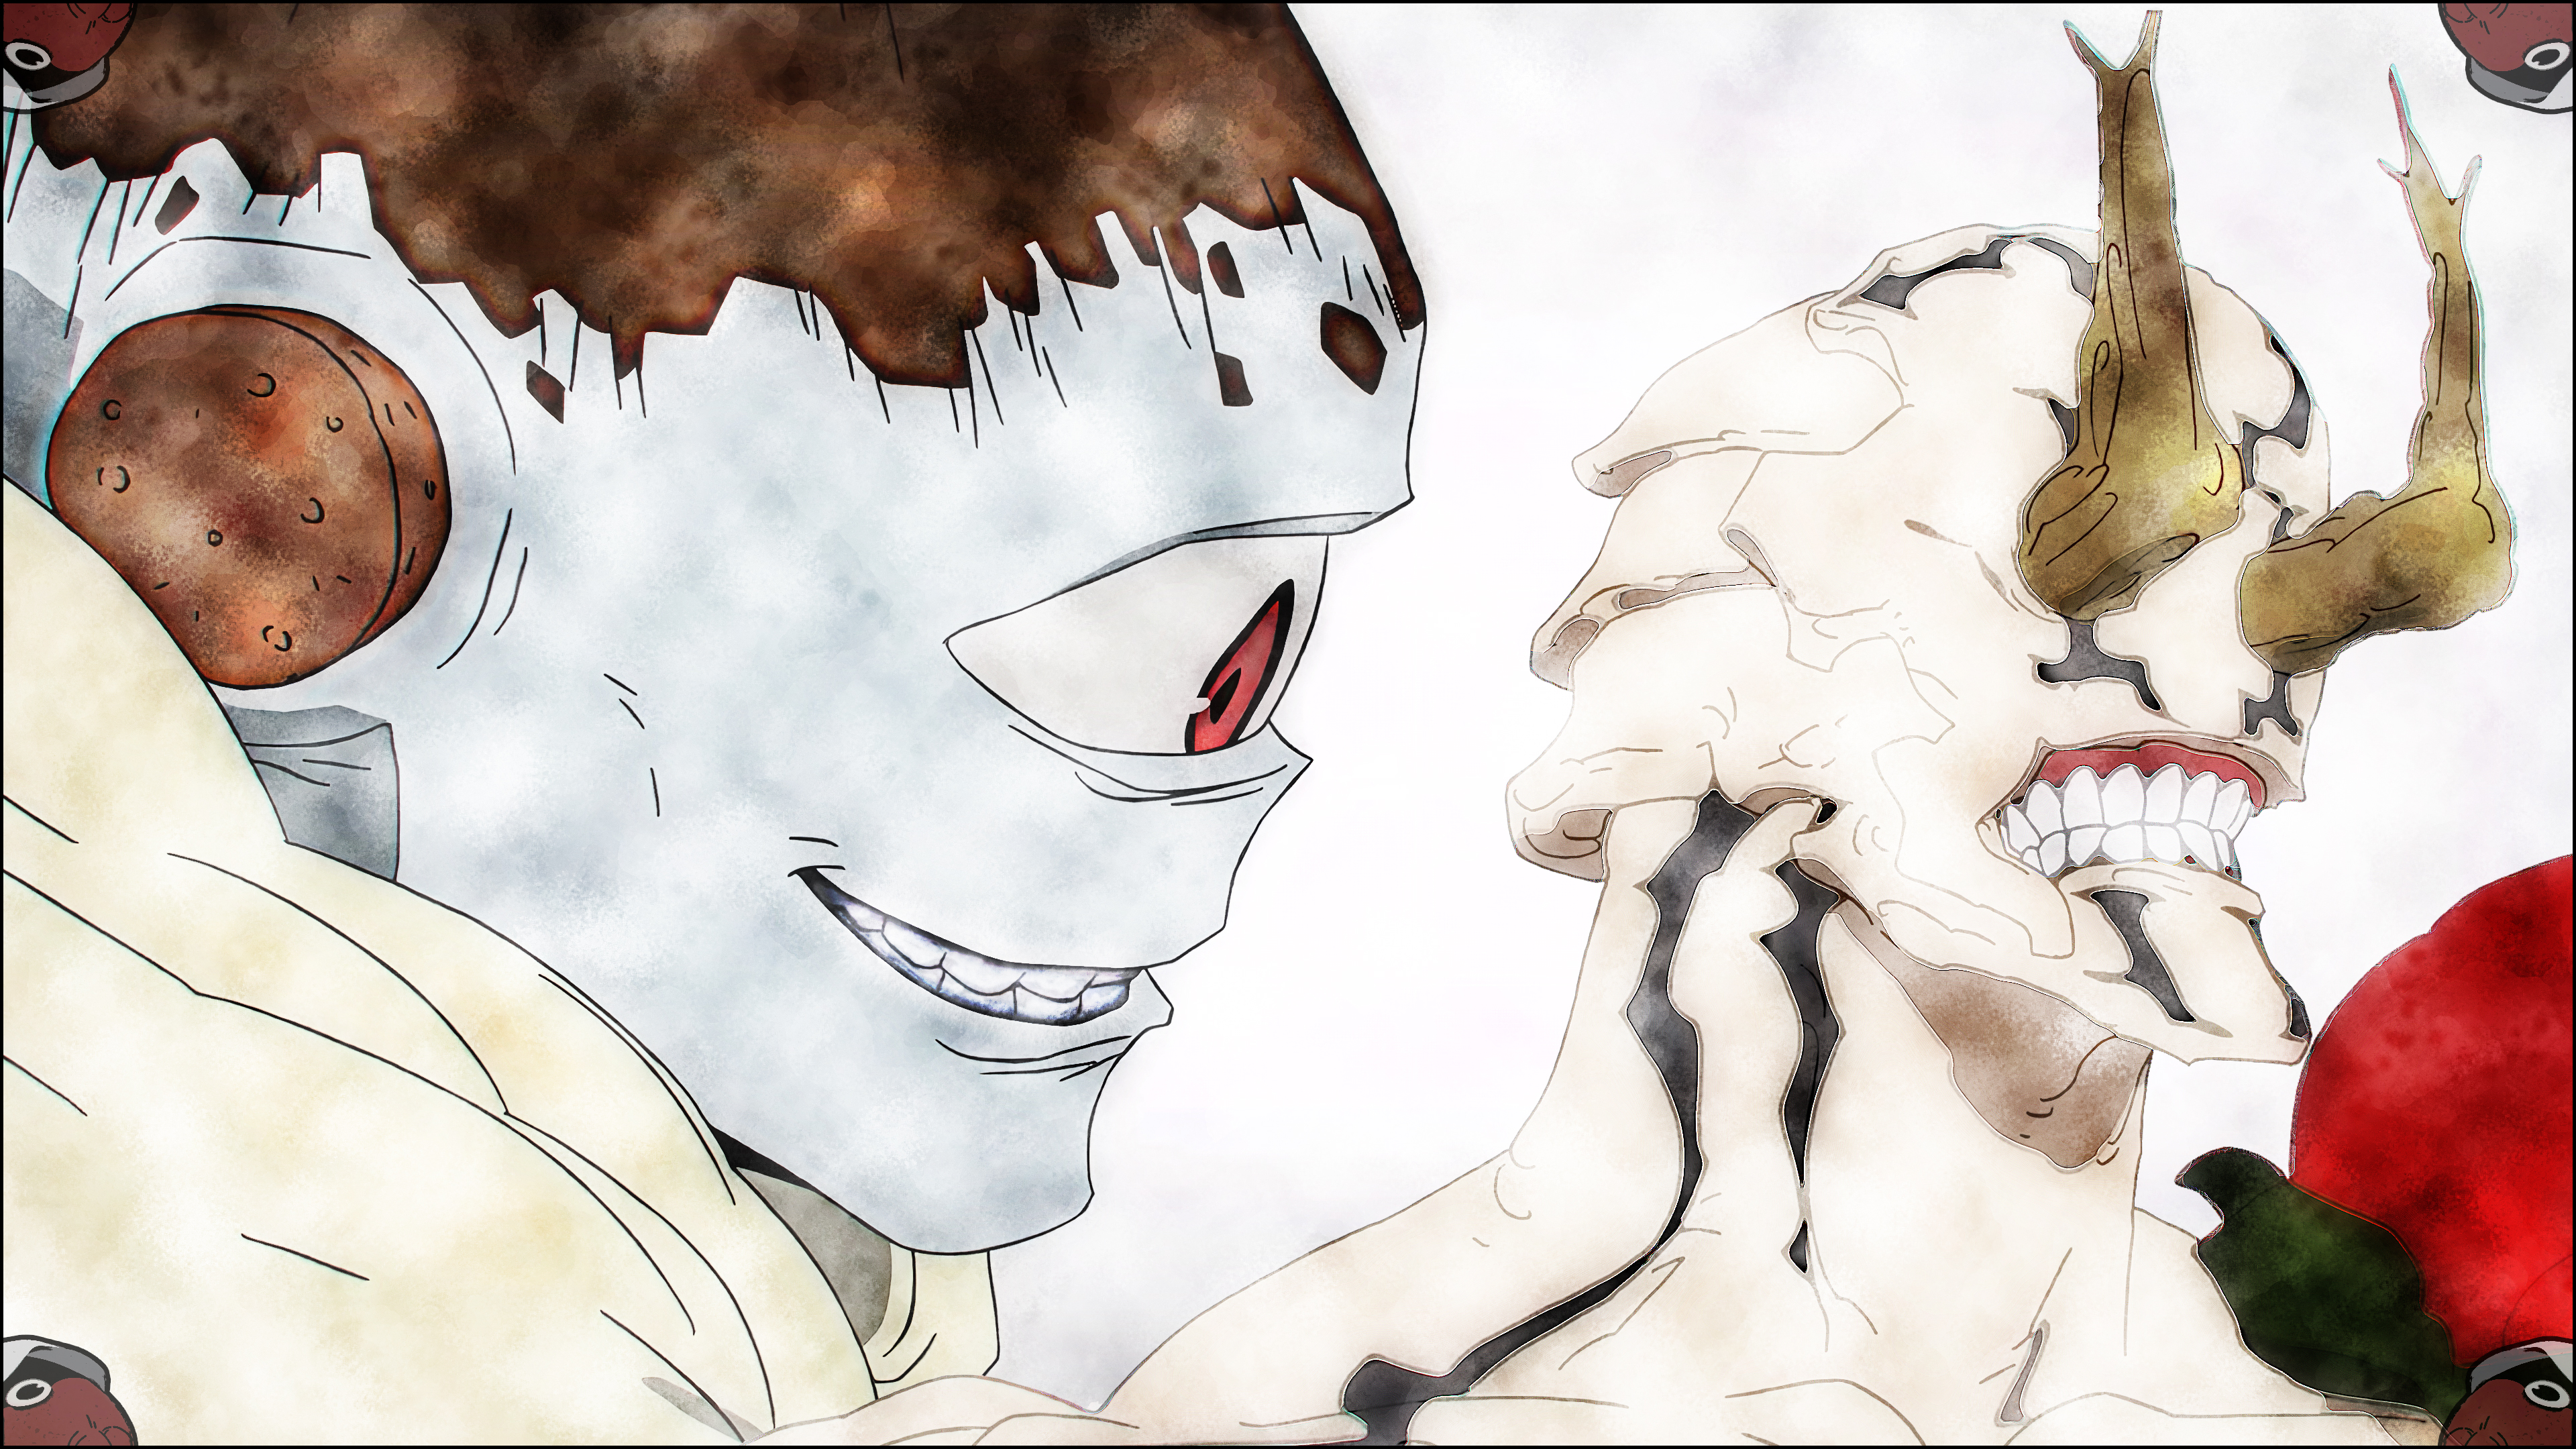 Anime 3840x2160 Jujutsu Kaisen hanami Anime screenshot anime anime creatures smiling teeth